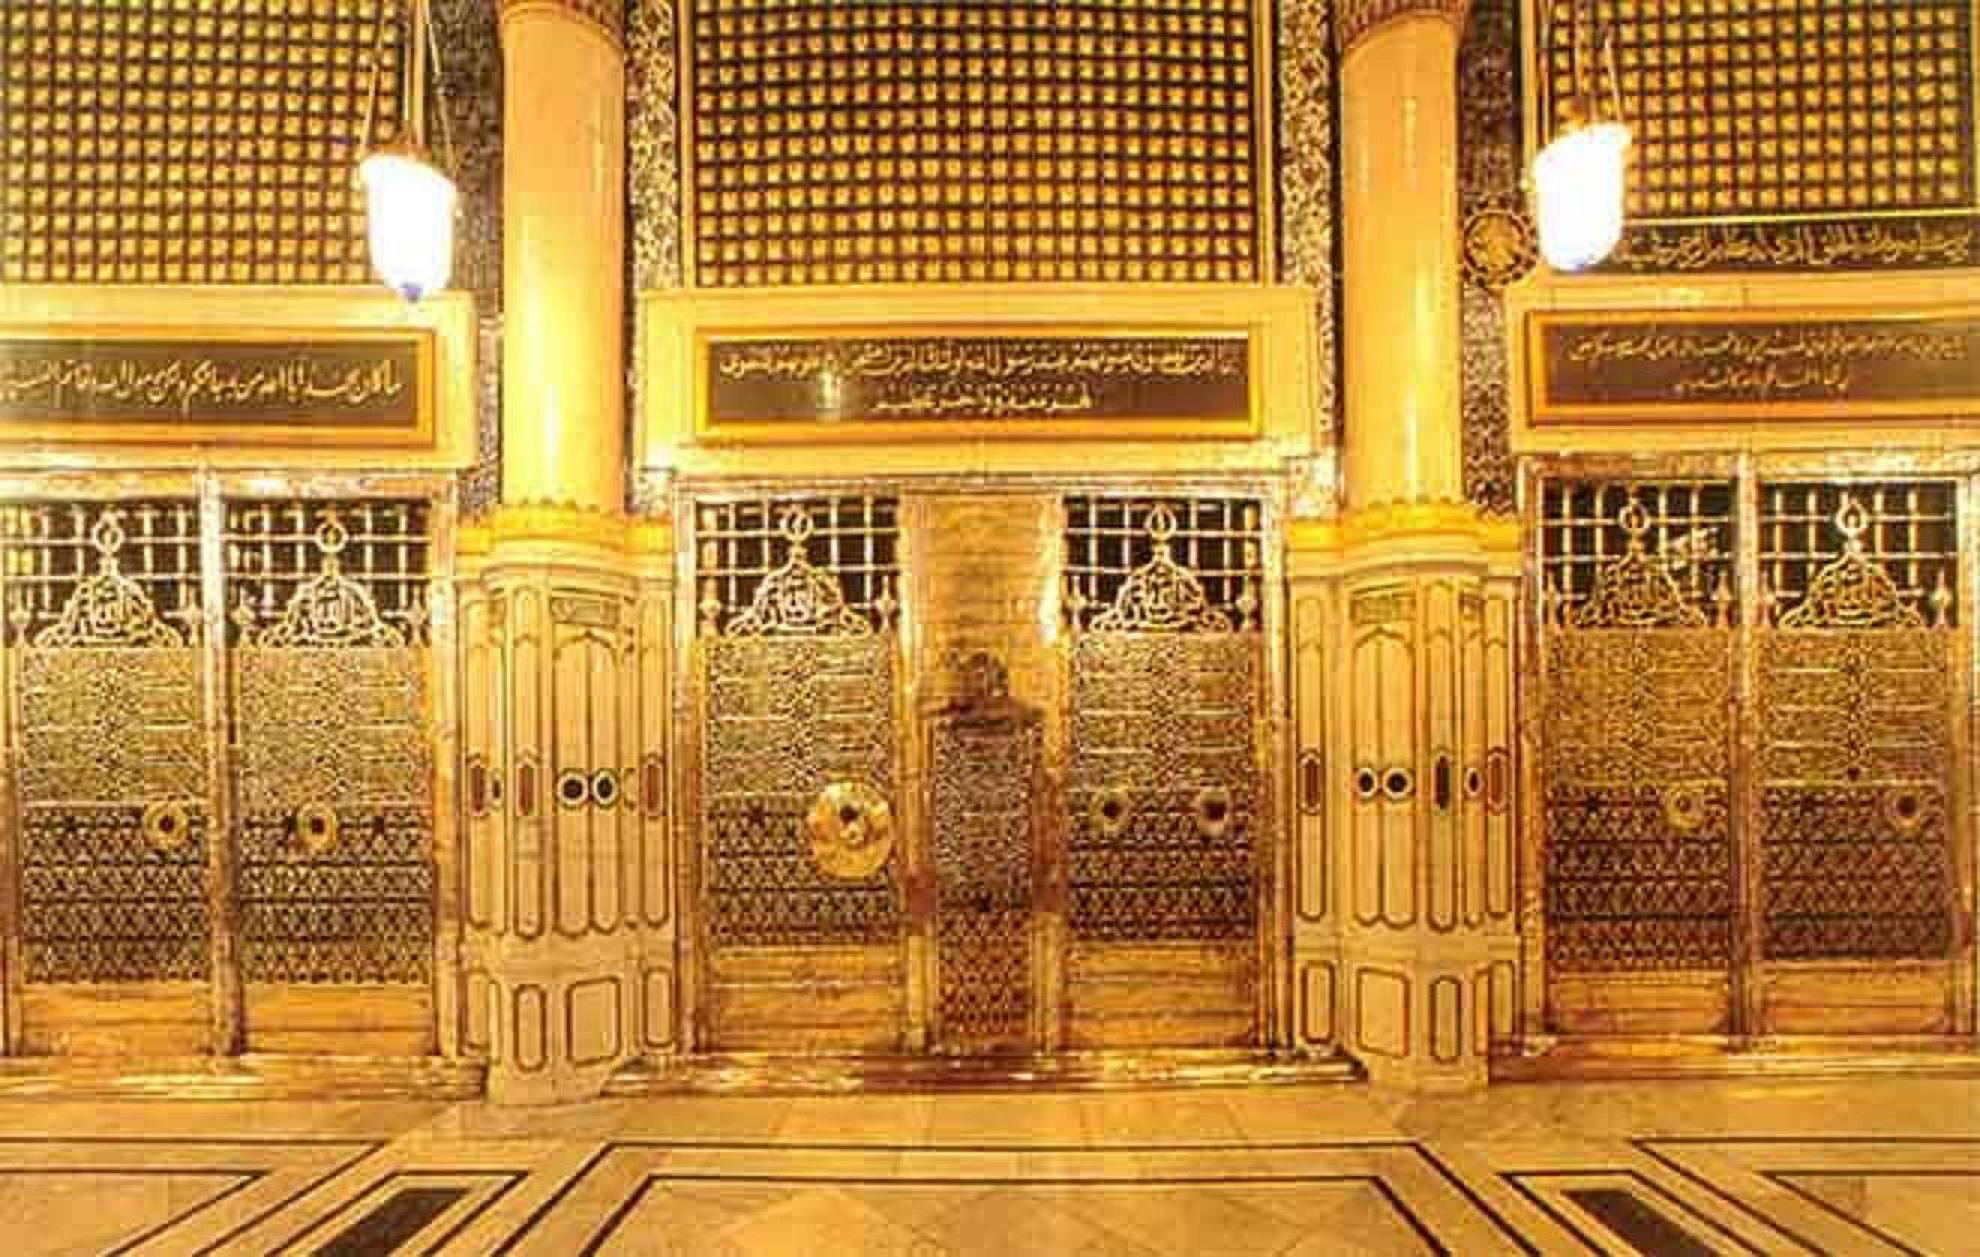 masjid e nabvi wallpaper,architecture,building,column,arch,facade